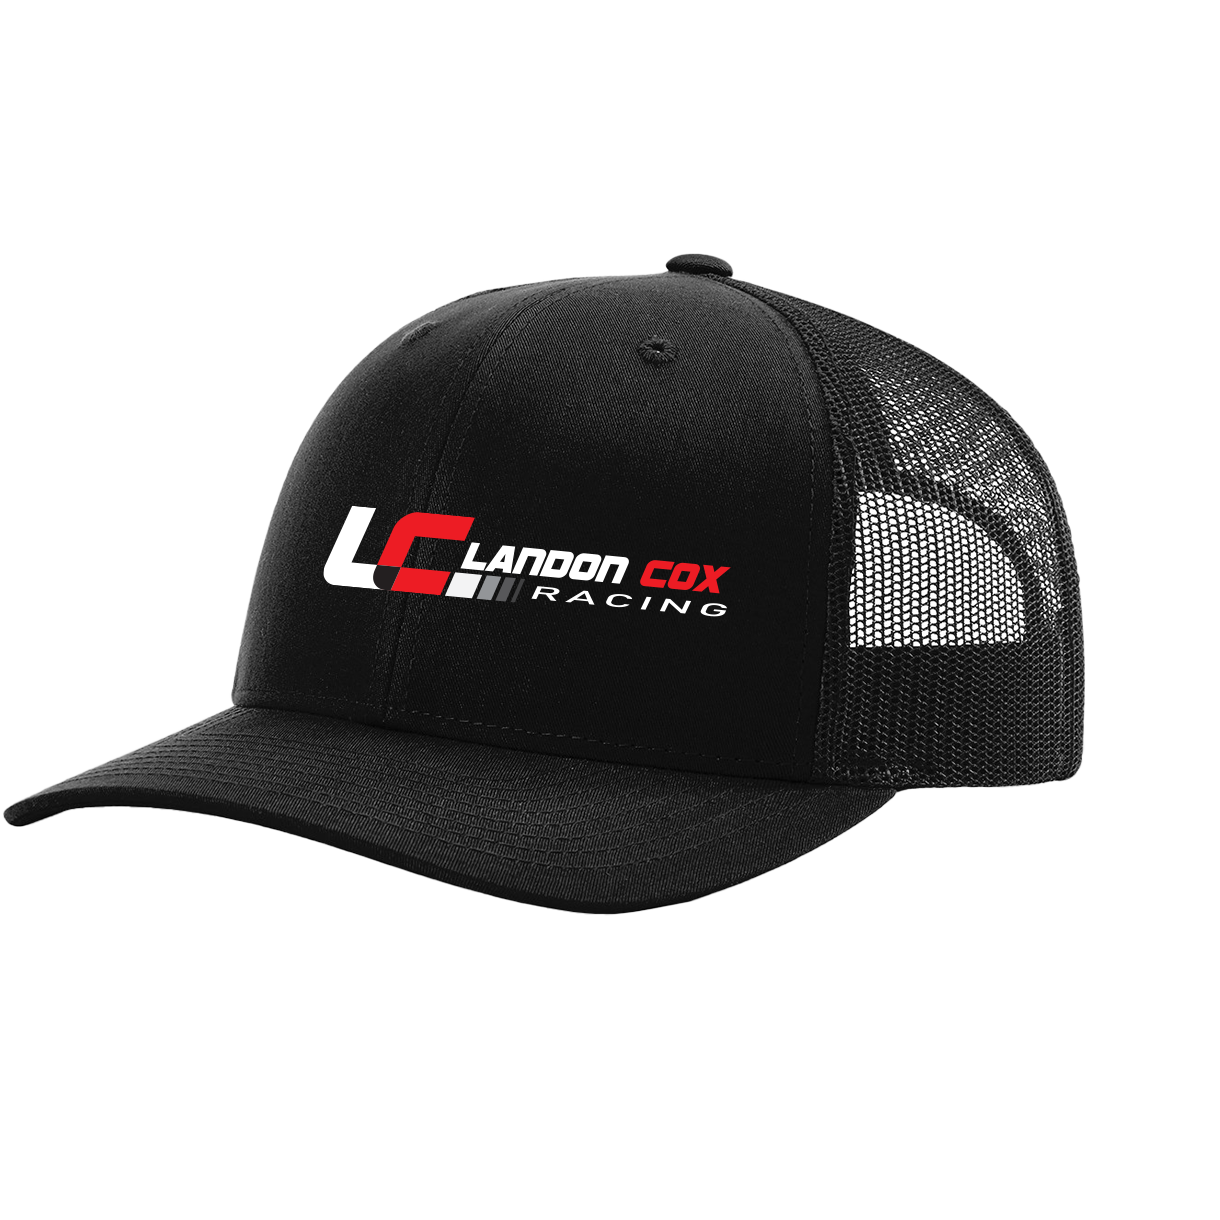 Landon Cox Logo Hat Black